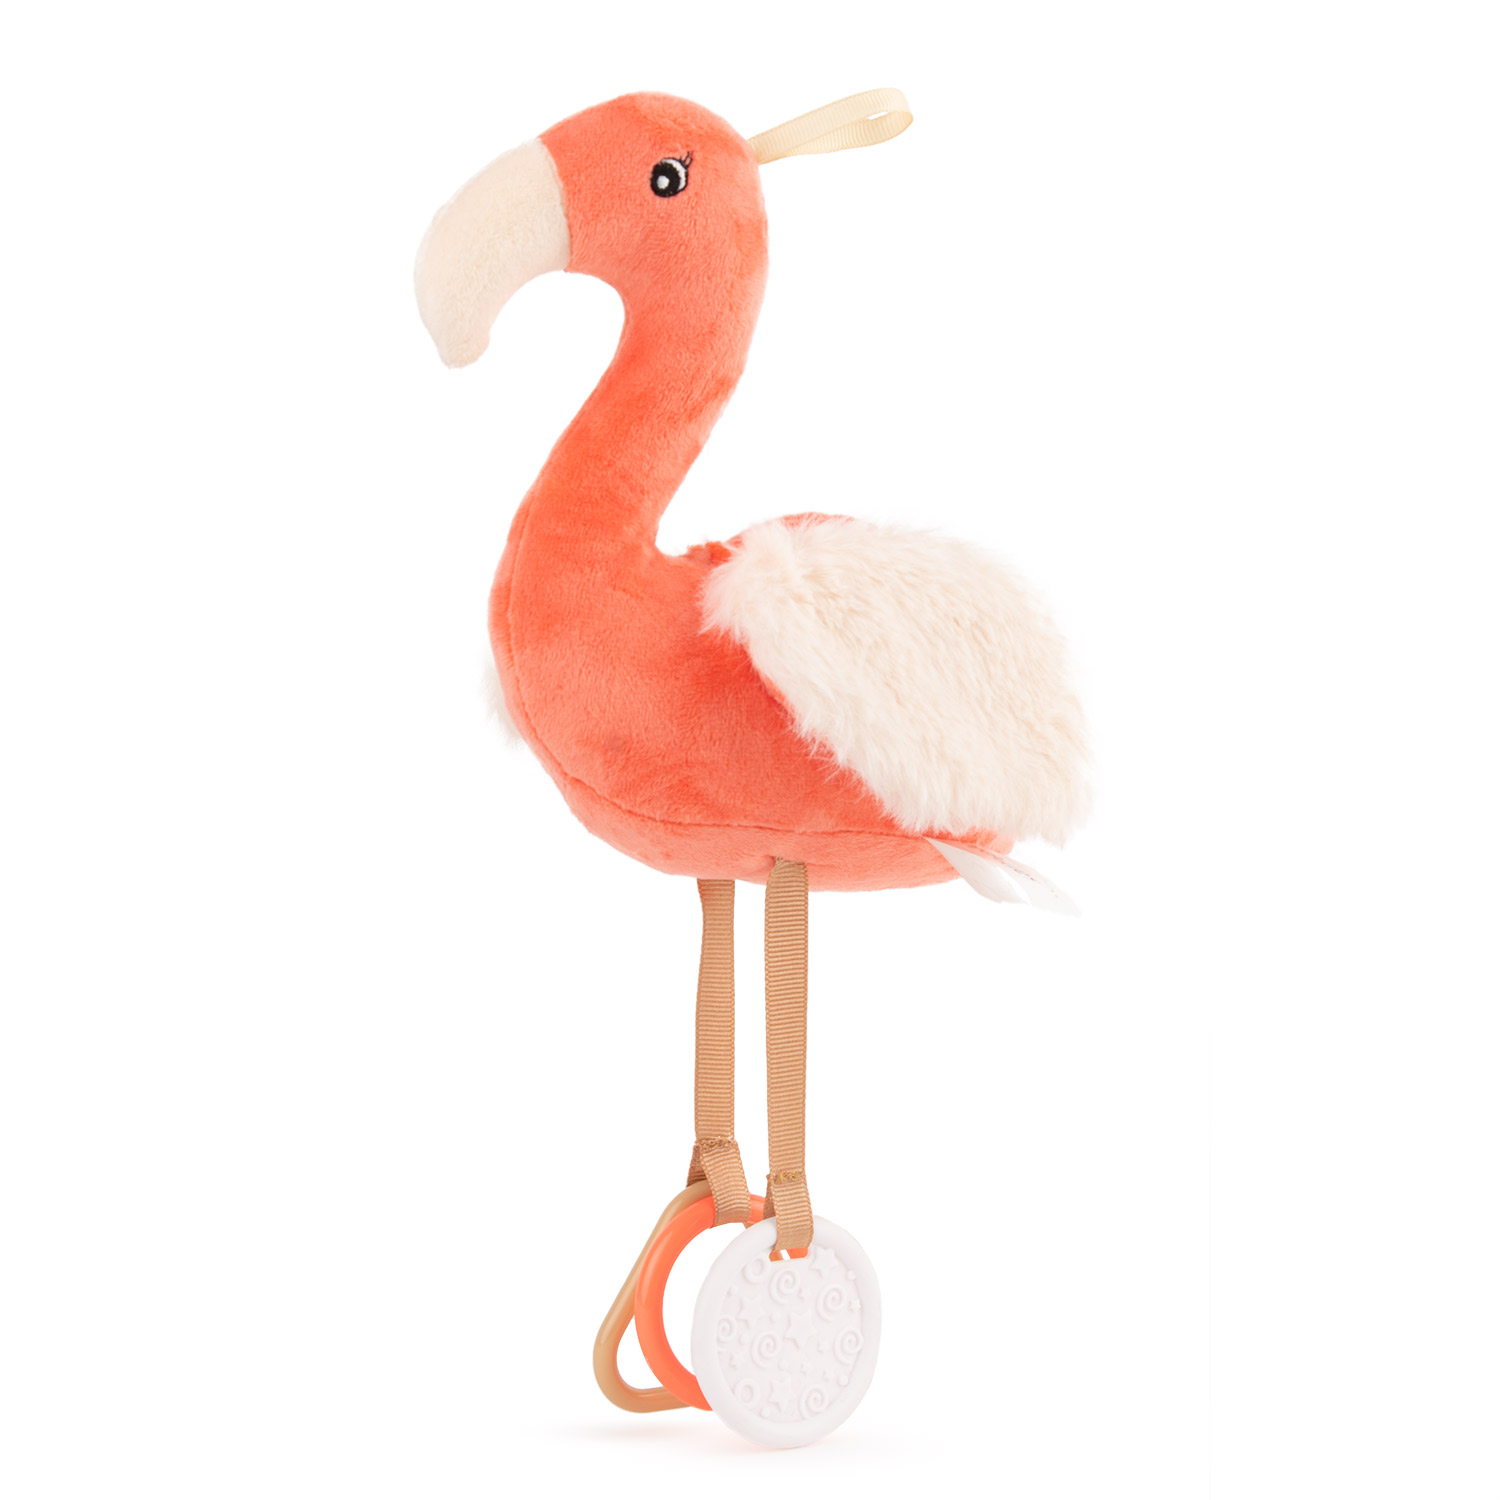 Baby toy flamingo - Orange